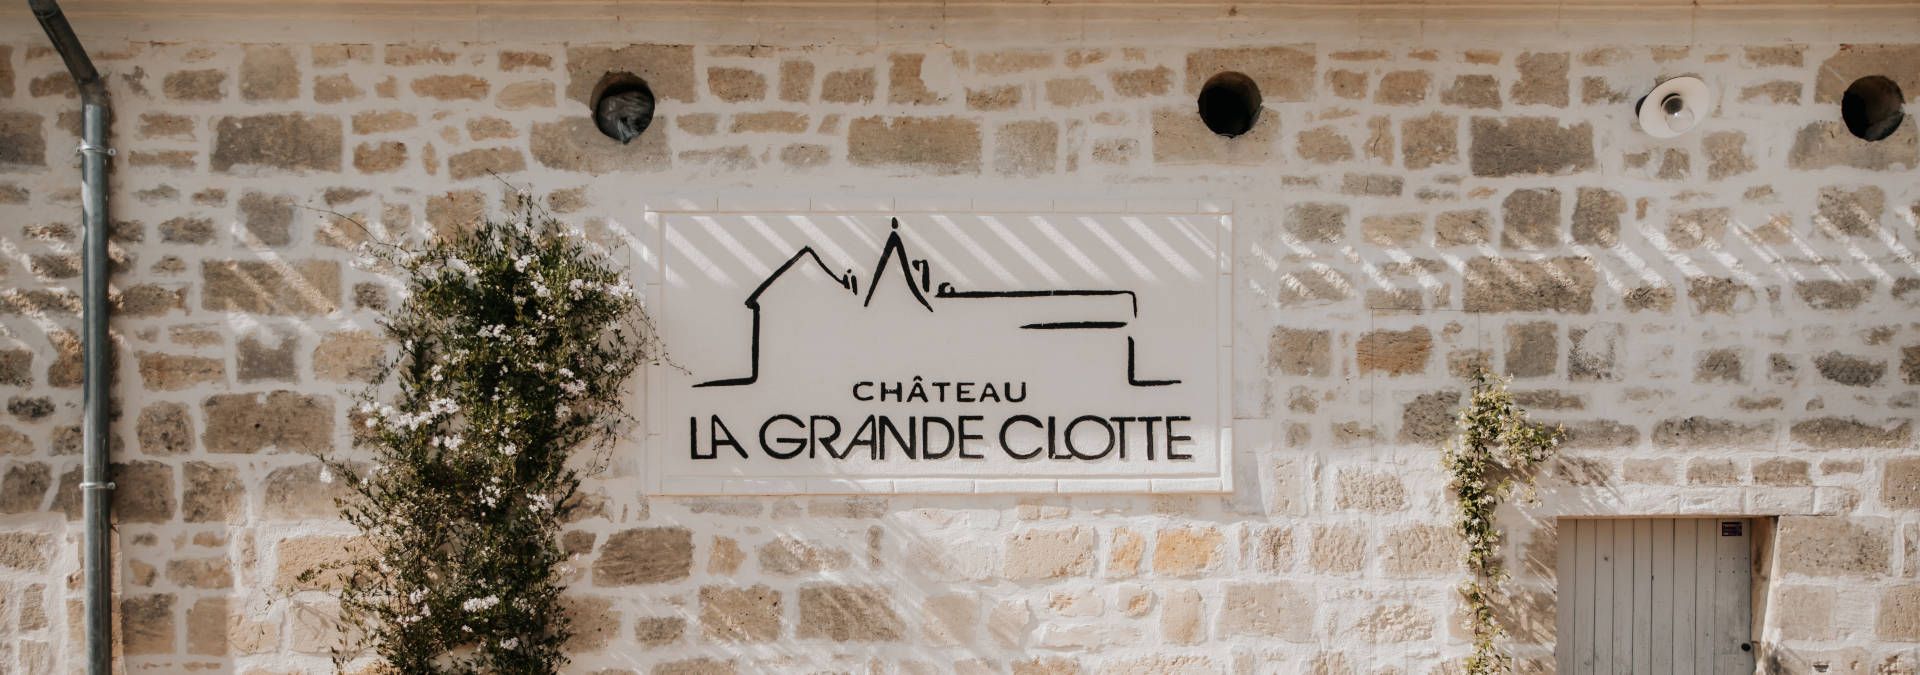 Château La Grande Clotte - Rue des Vignerons